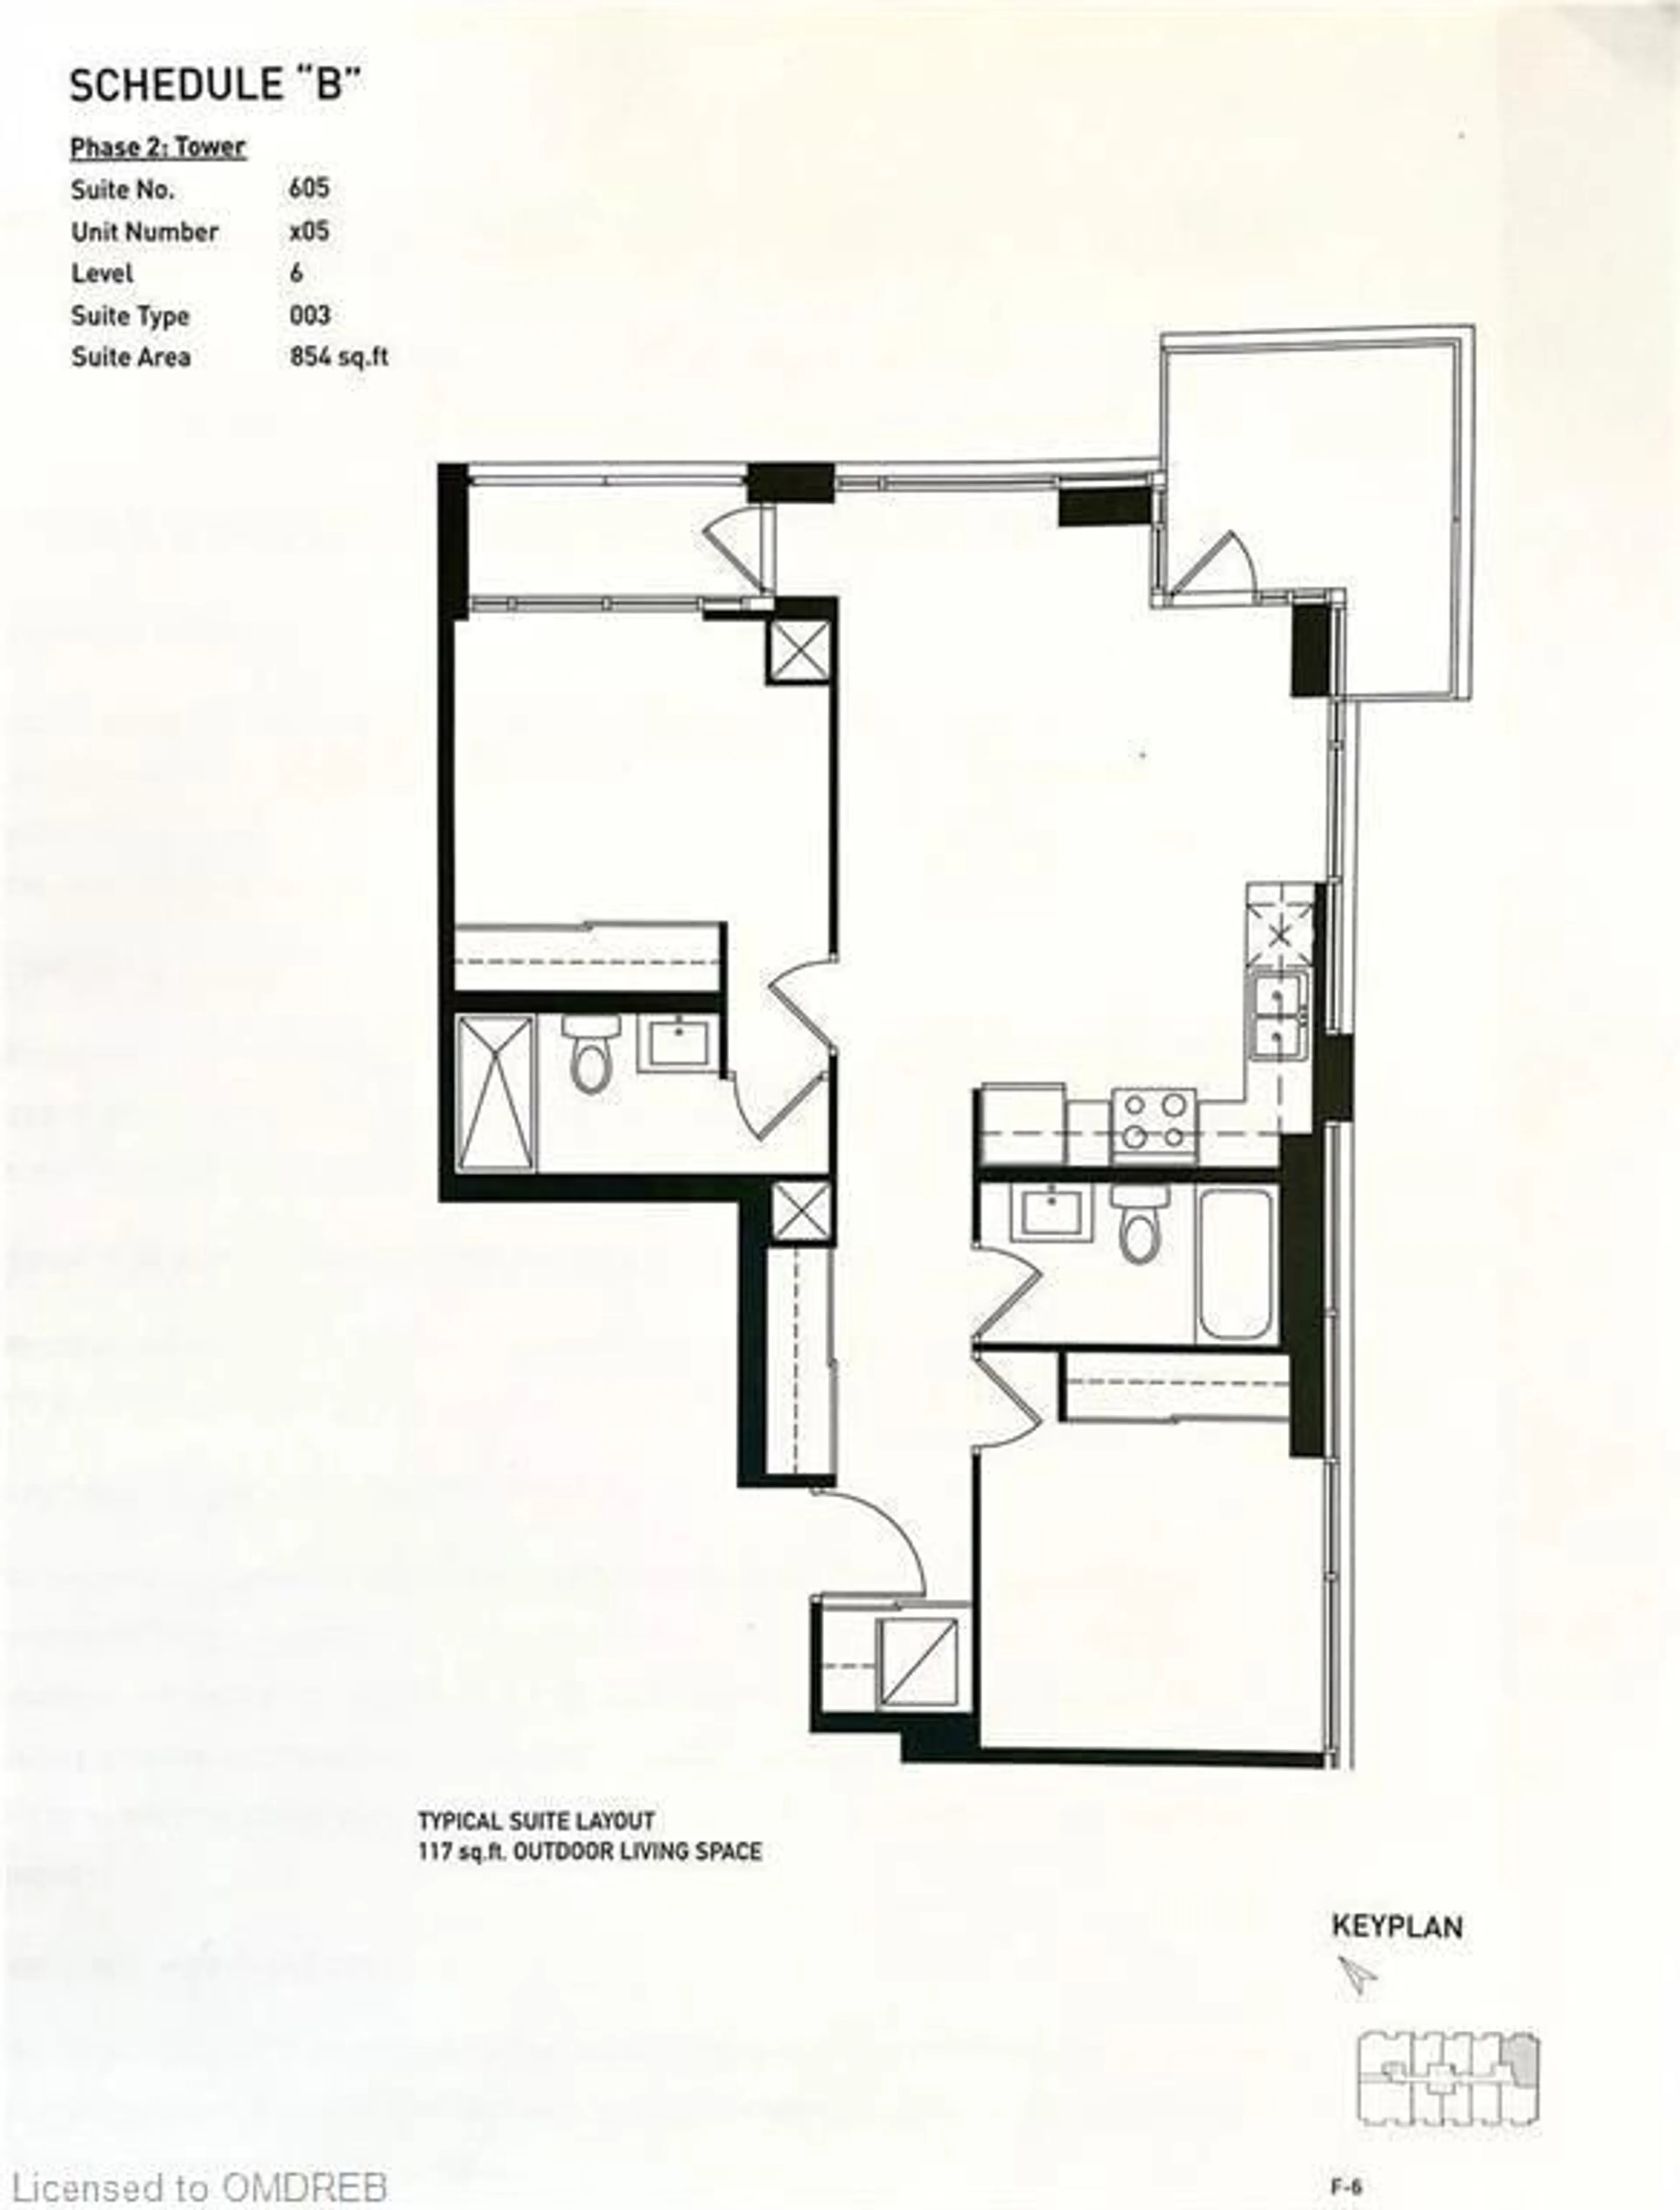 Floor plan for 2481 Taunton Rd #605, Oakville Ontario L6H 3R7